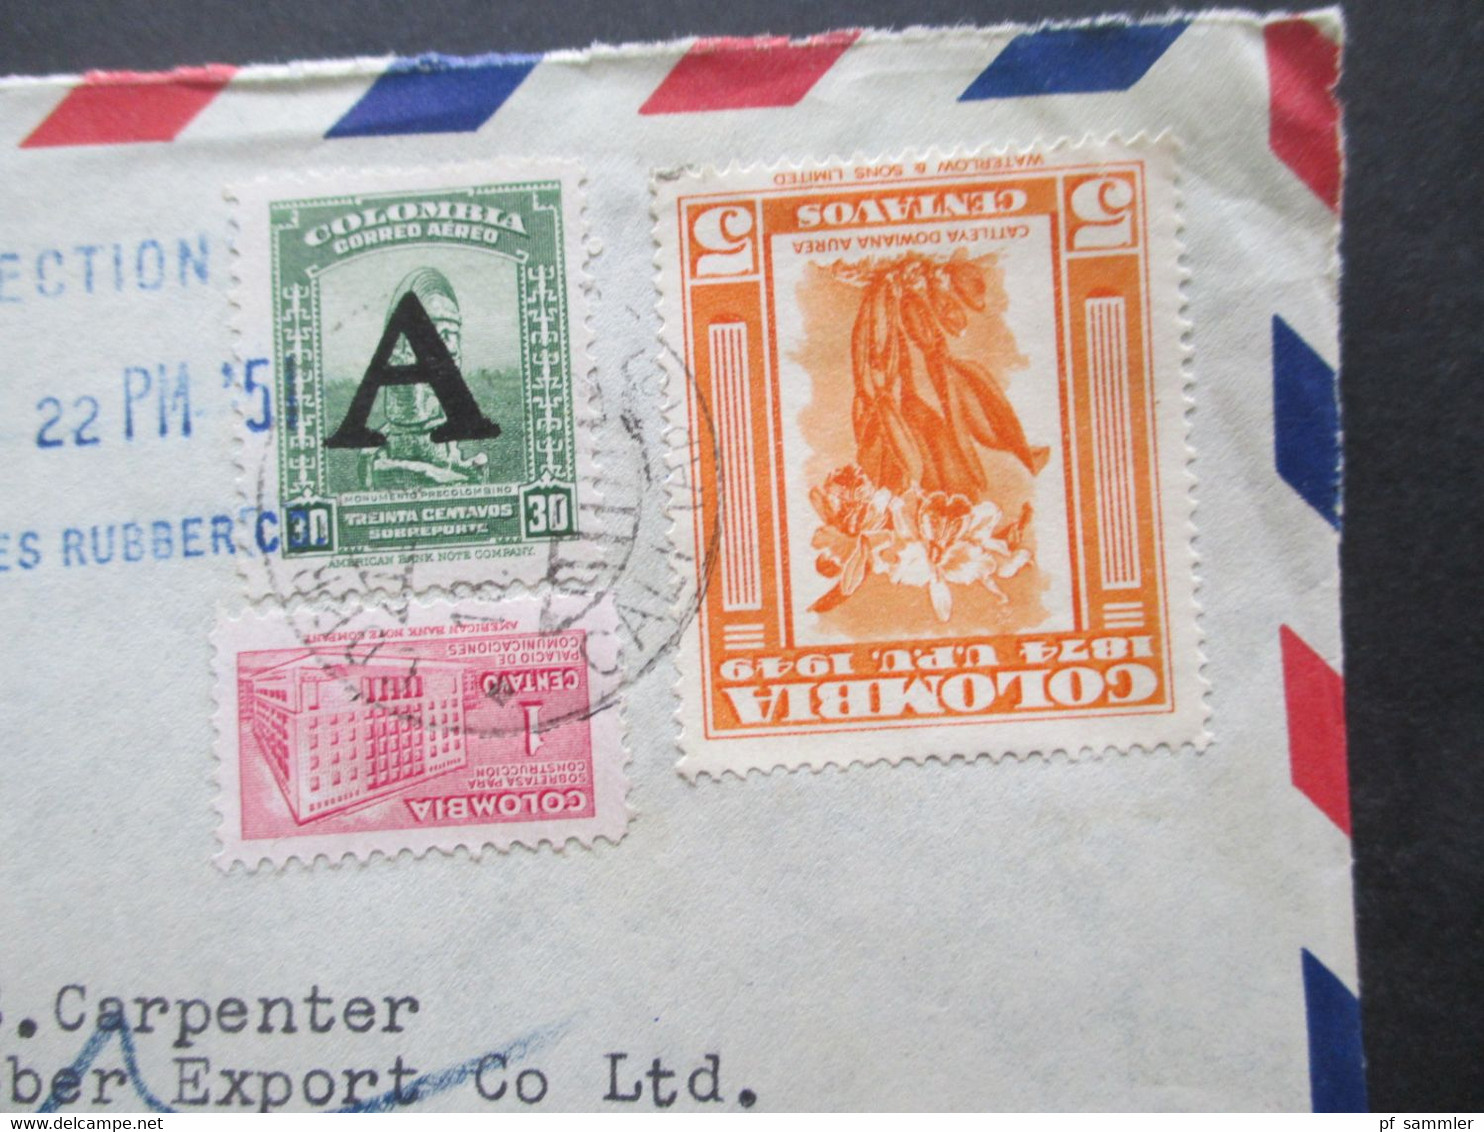 Kolumbien Colombia 1951 Firmenumschlag Compania Croydon Del Pacifico S.A. Blauer Eingangsstempel Mail Section Rubber - Colombie